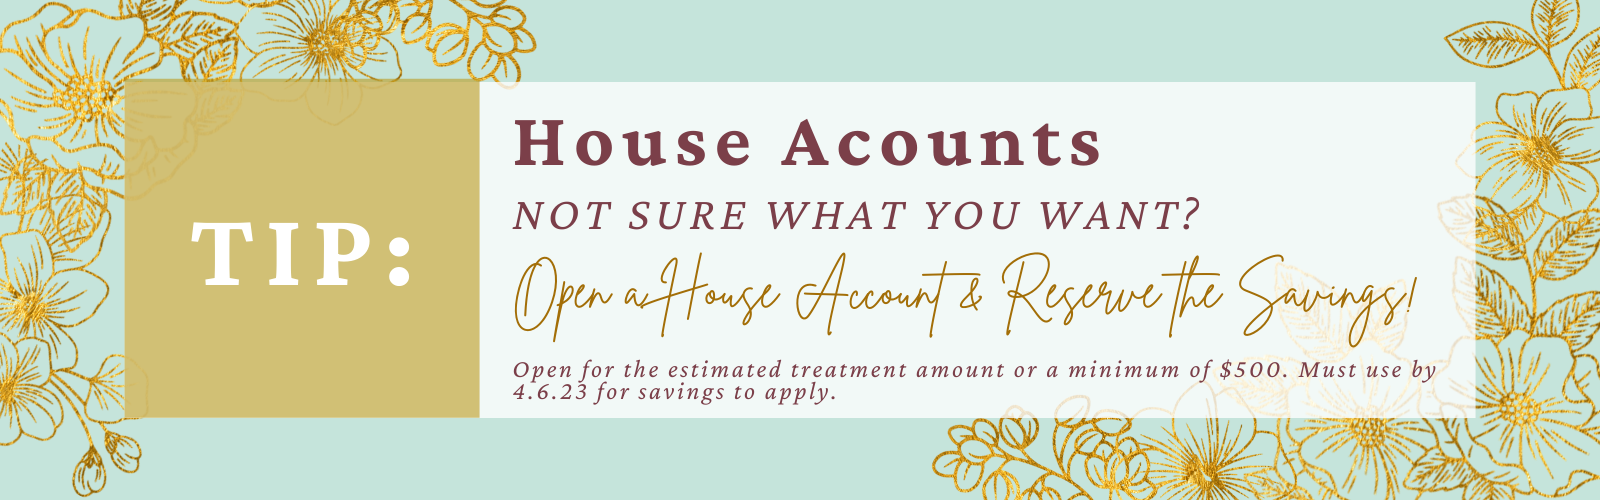 House Accounts reserve the savings